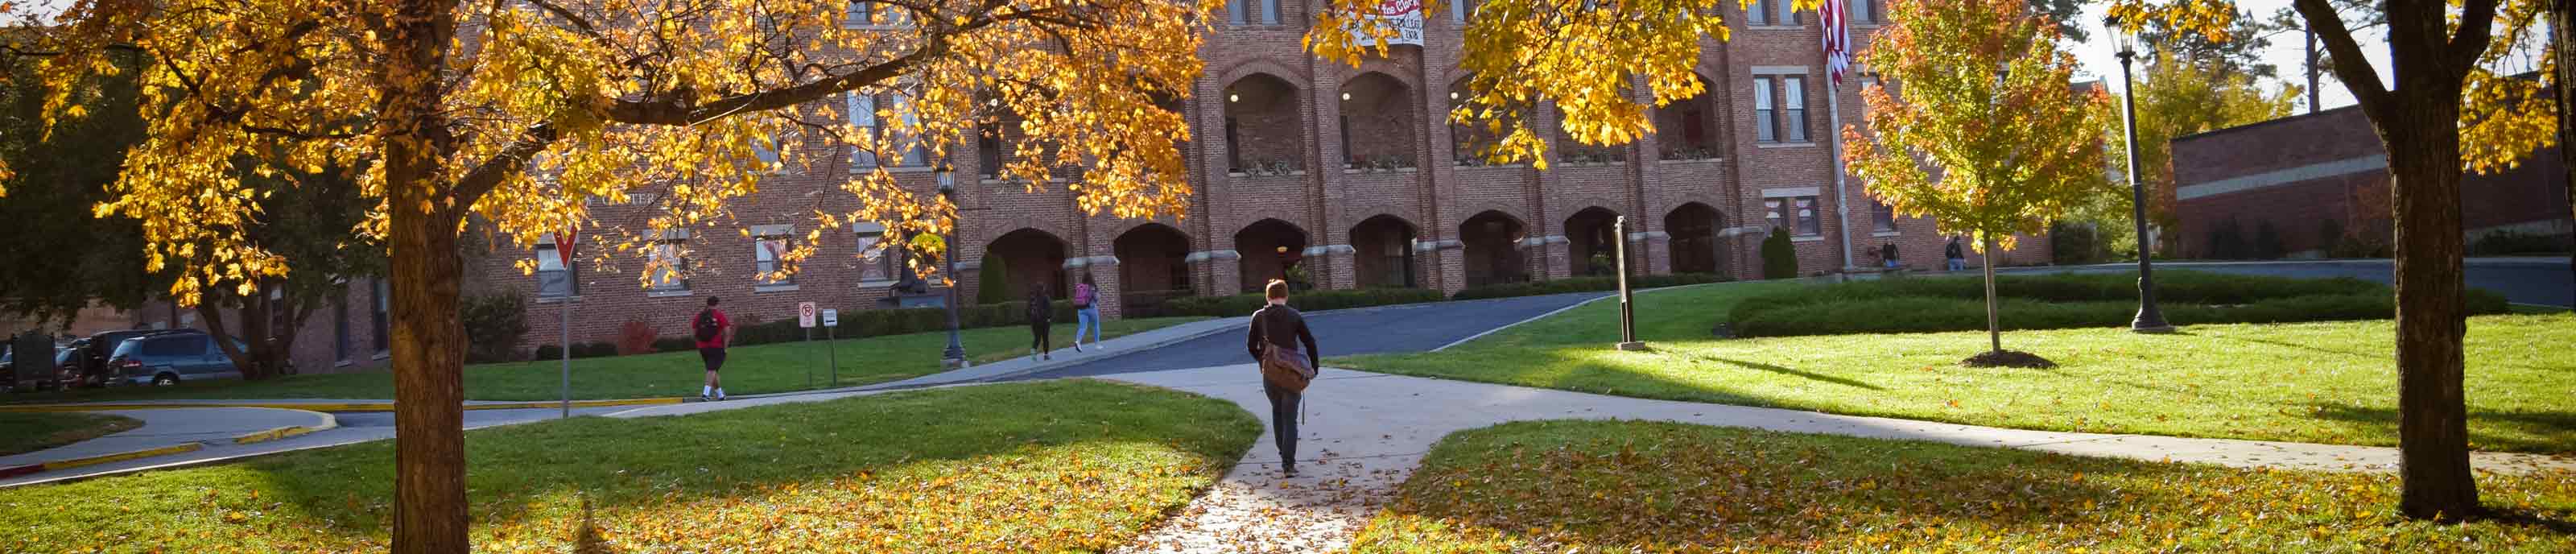 A student walks on an autumn Benedictine College campus